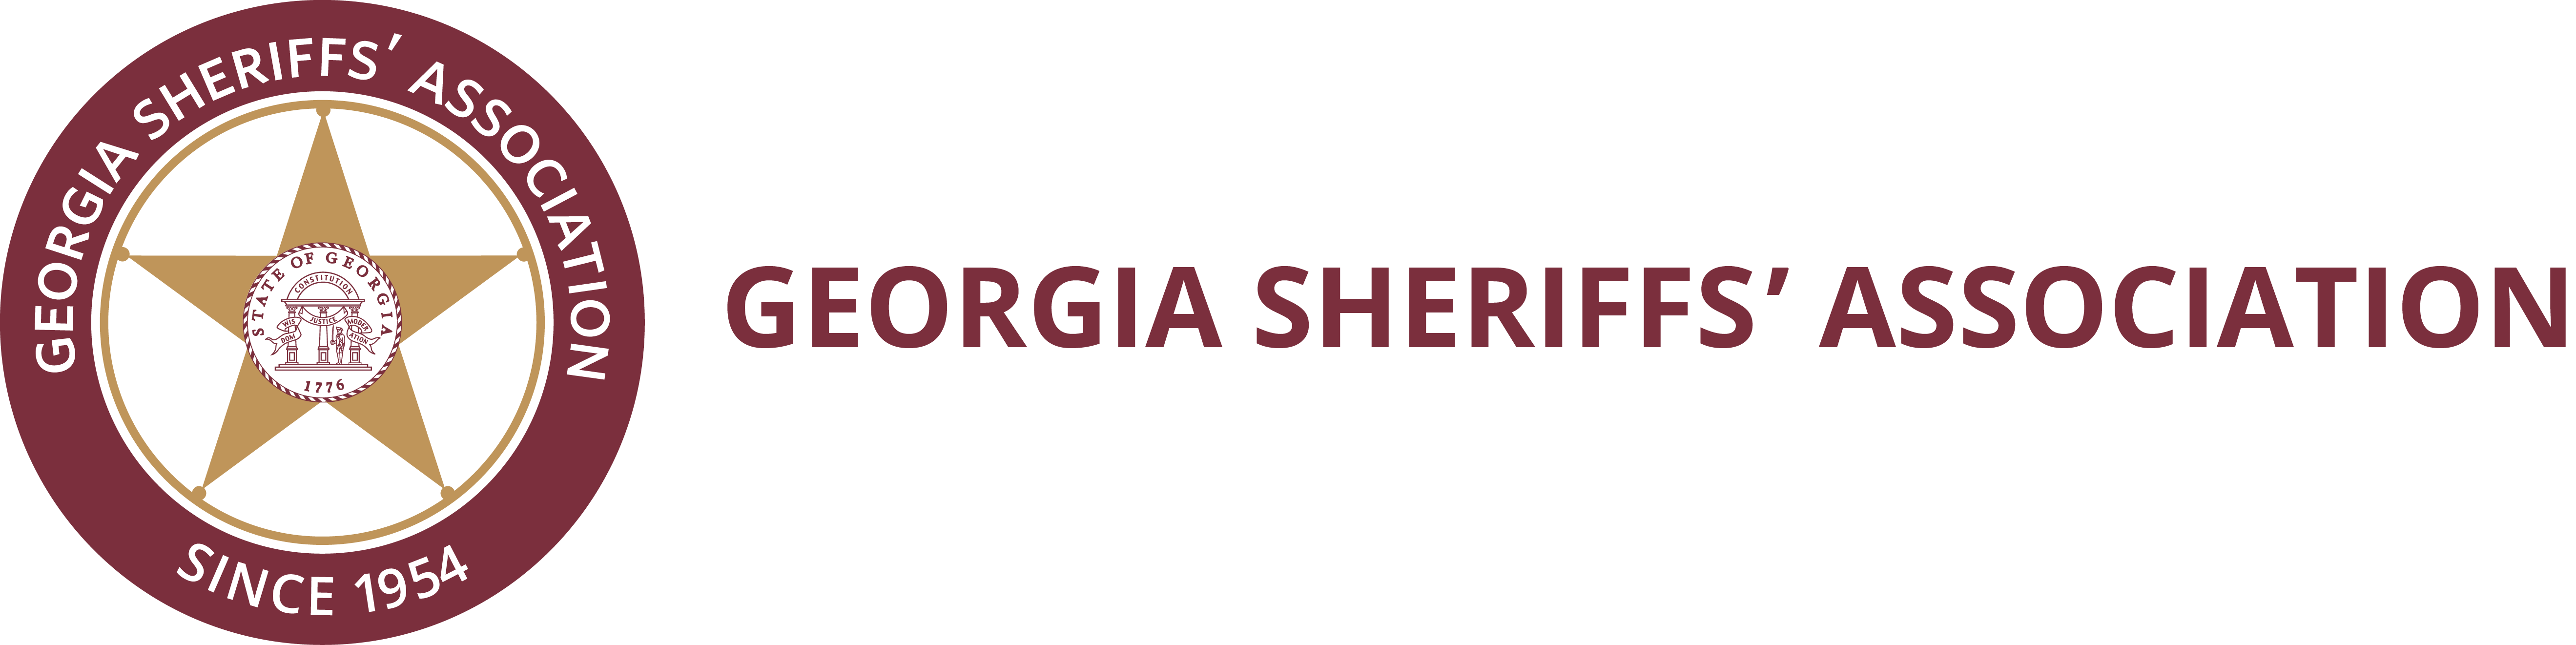 Georgia Sheriff's Association